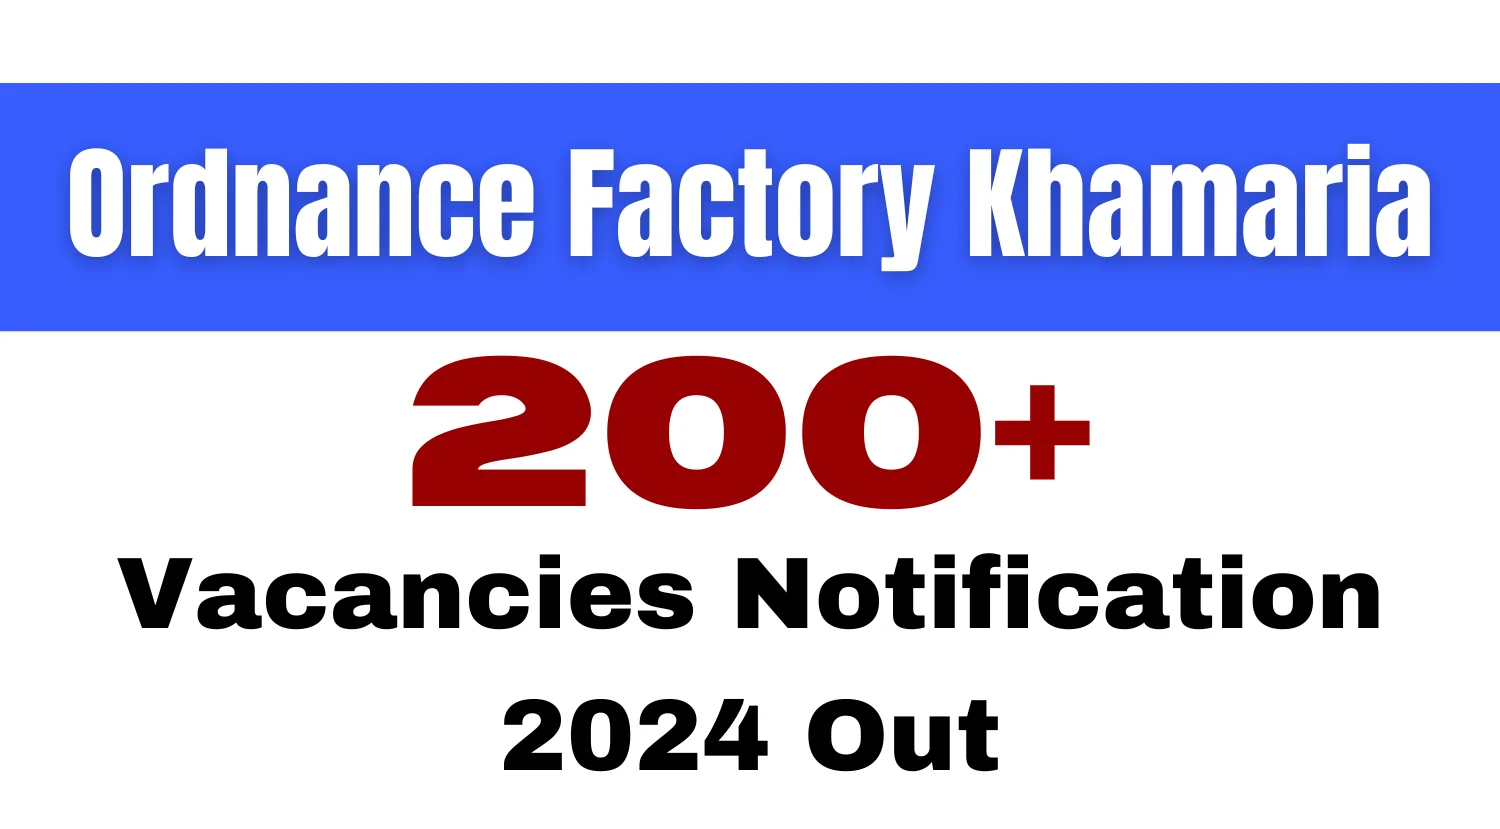 Ordnance Factory Khamaria Recruitment Notification 2024 for 225 Vacancies Out